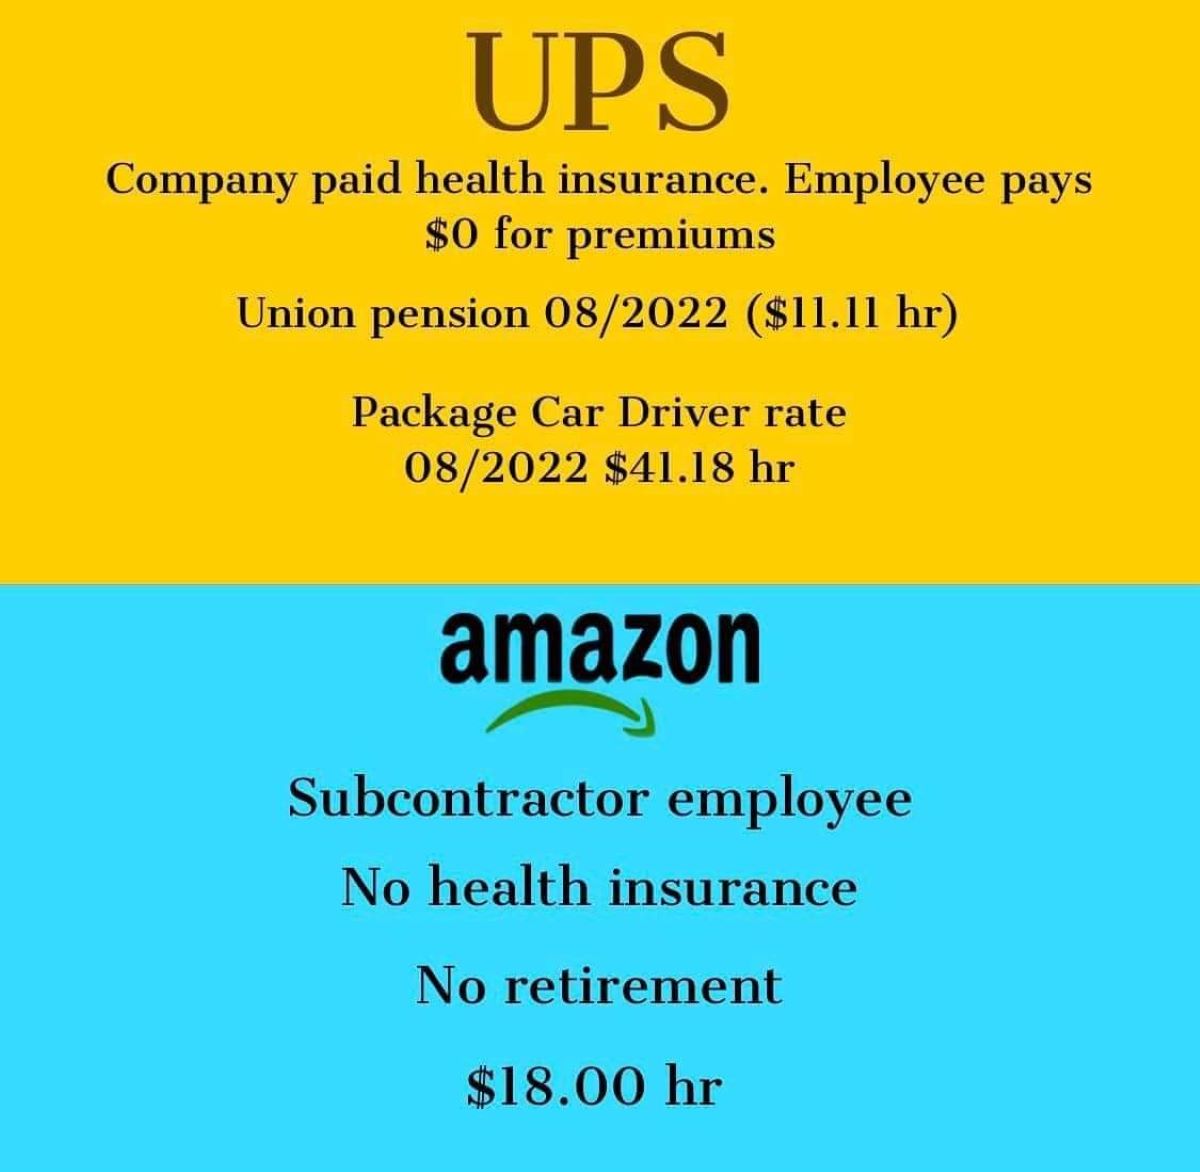 How Good Is UPS Health Insurance?